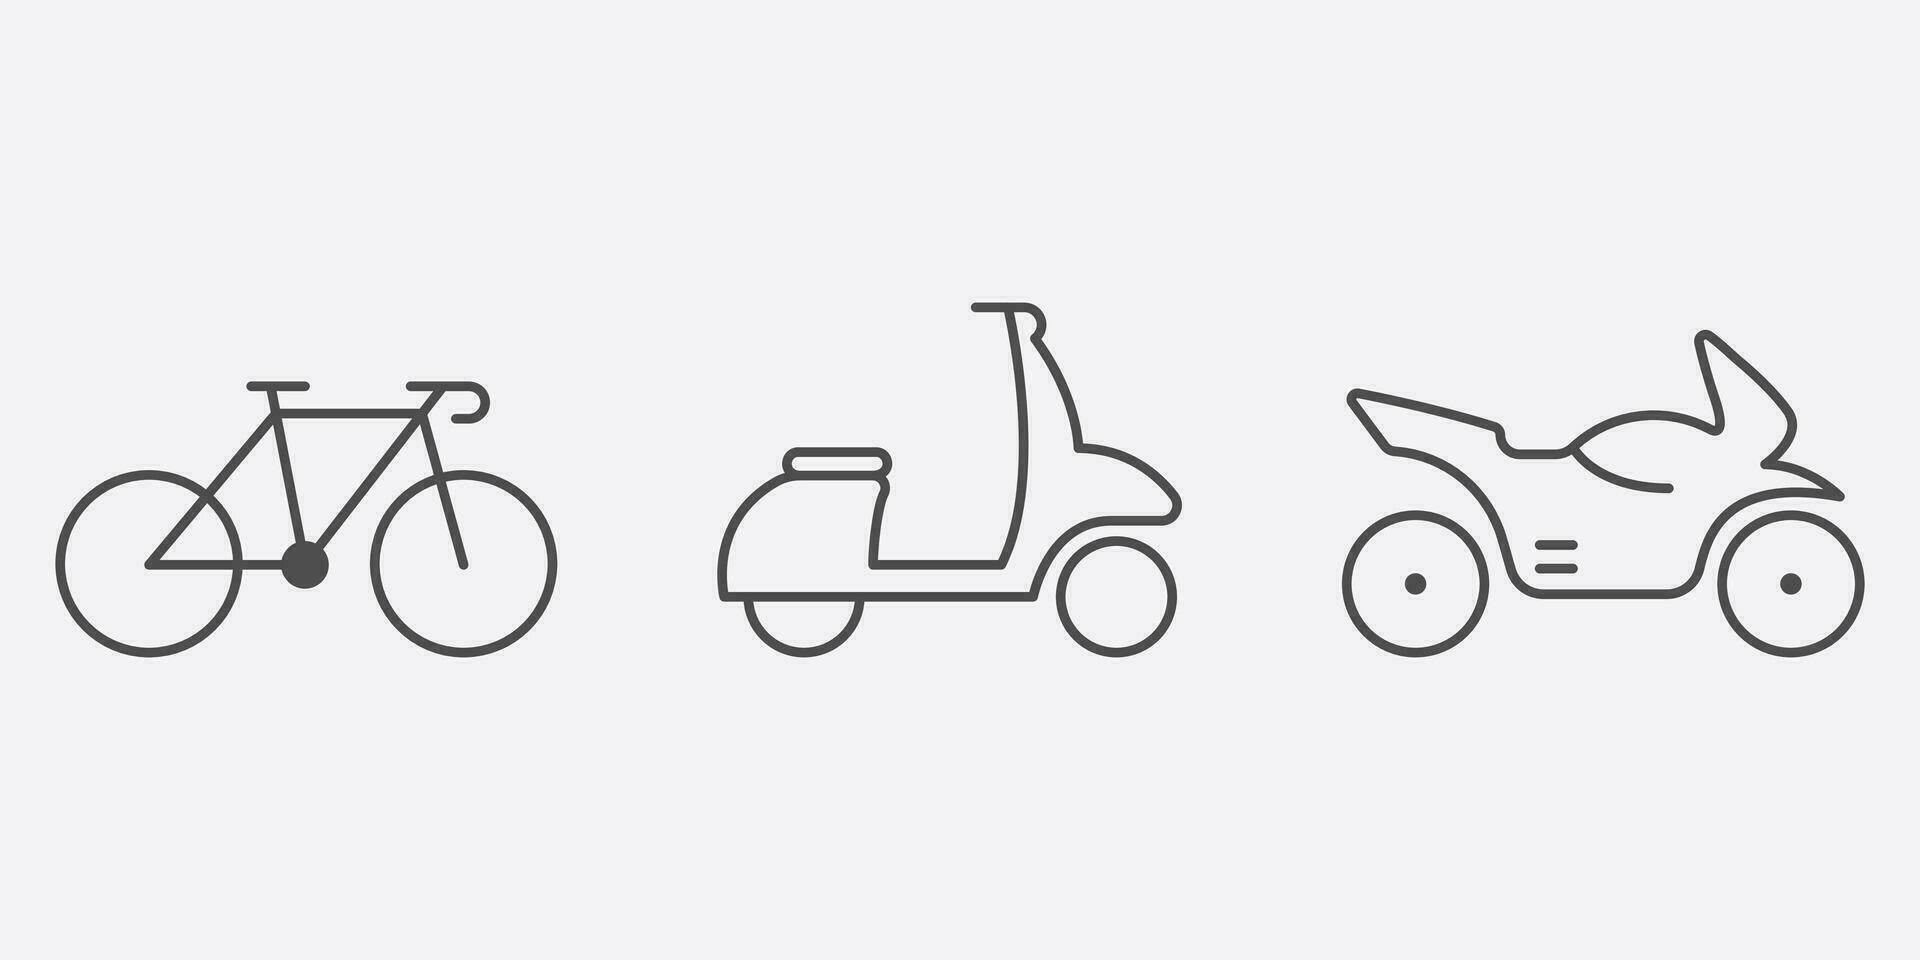 Delivery Service Transportation Line Icon Set. Motorbike, Bike, Moped, Scooter Linear Pictogram. Road Outline Sign. Motor Transport Symbol Collection. Editable Stroke. Isolated Vector Illustration.